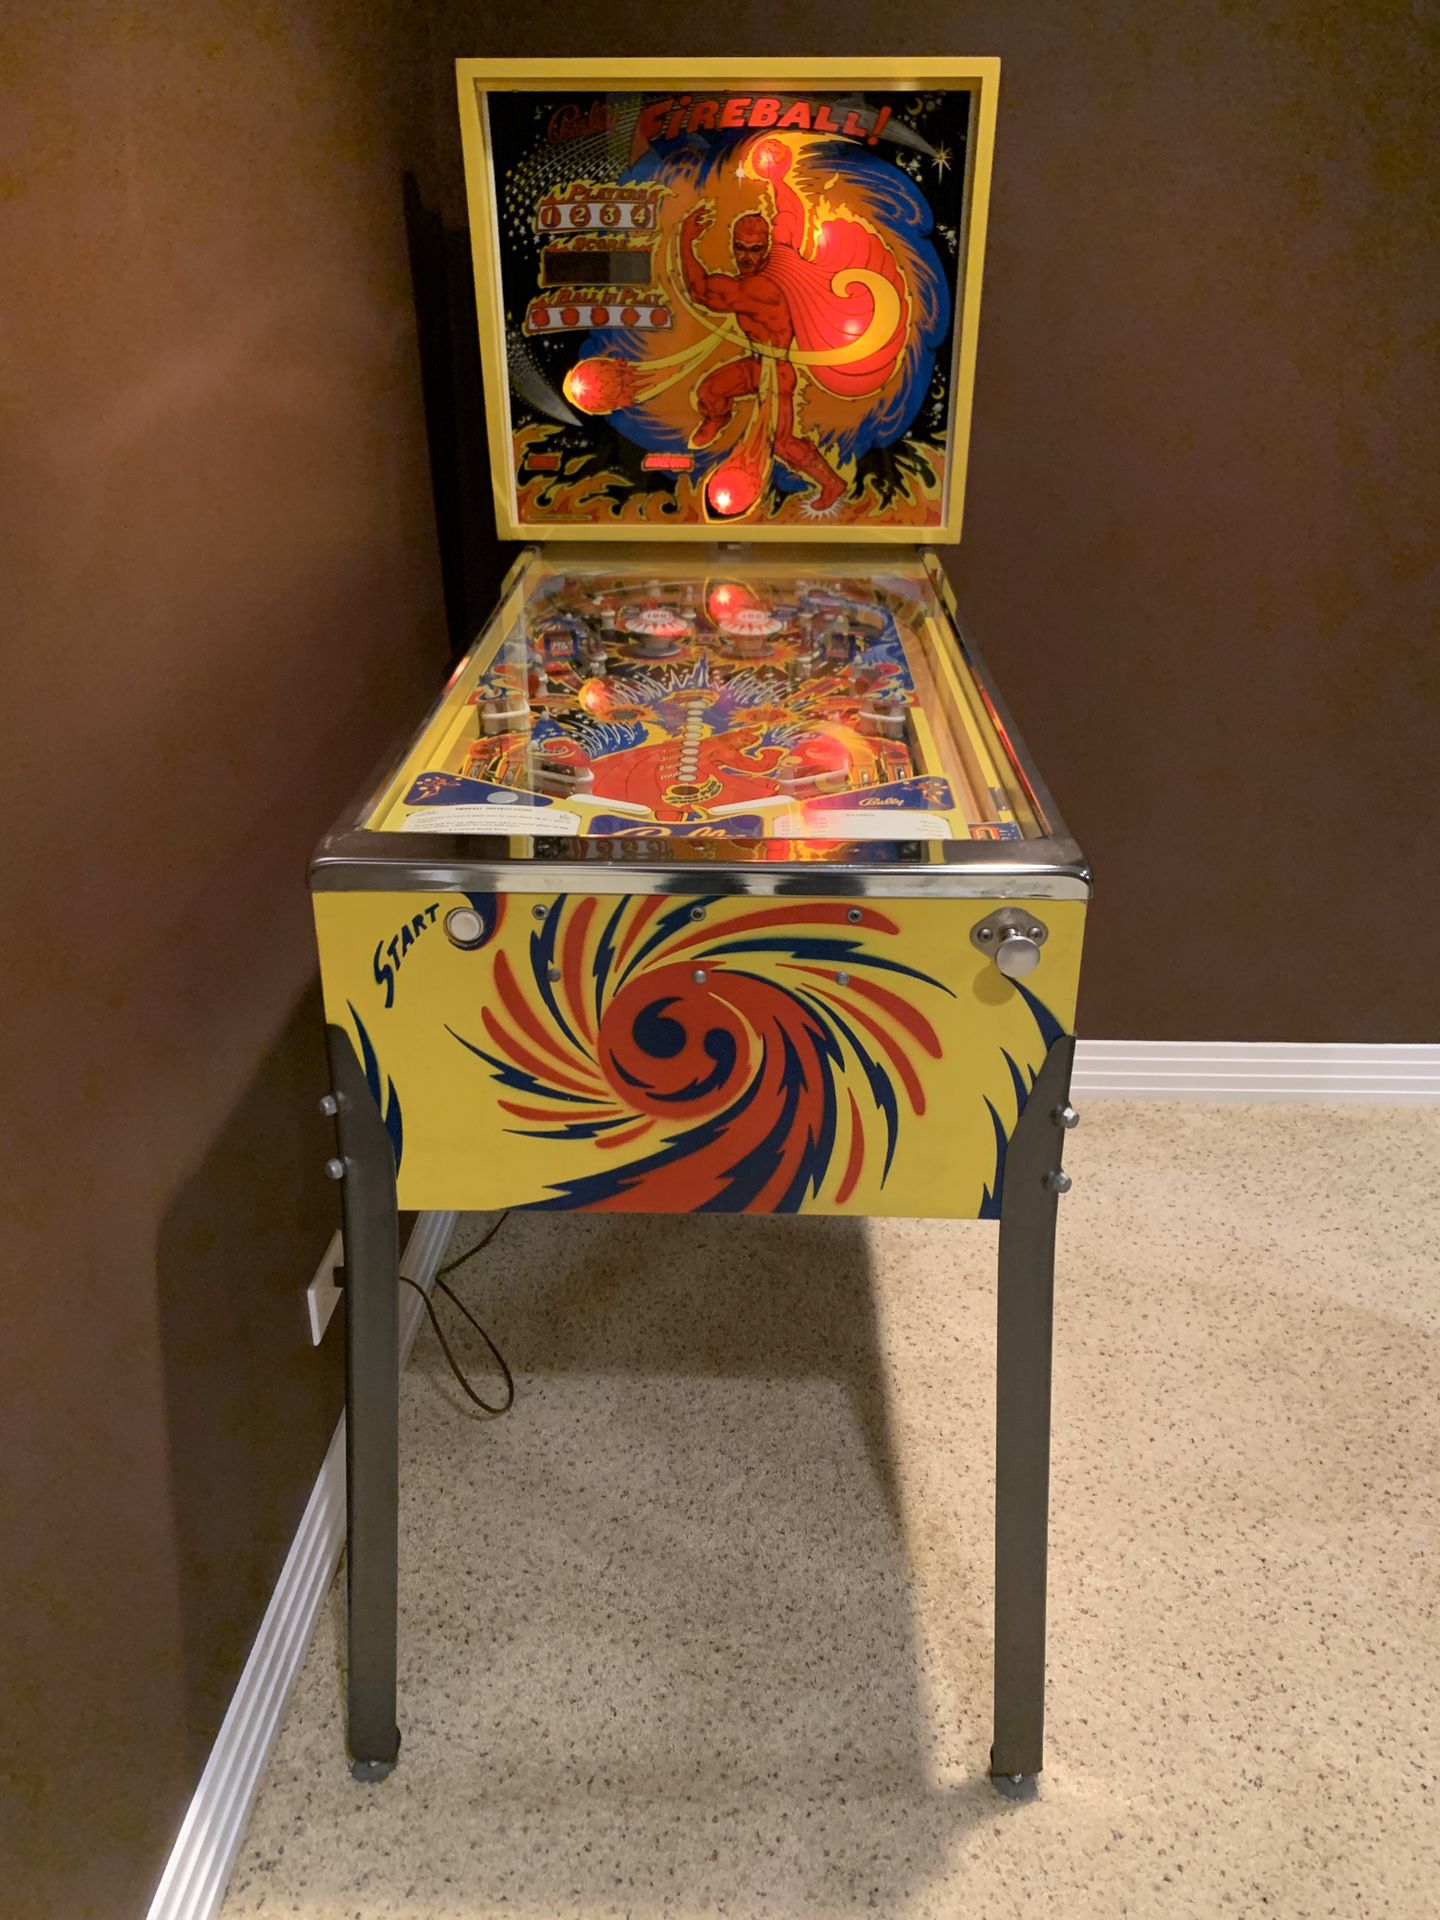 1976 Bally Fireball Pinball Machine